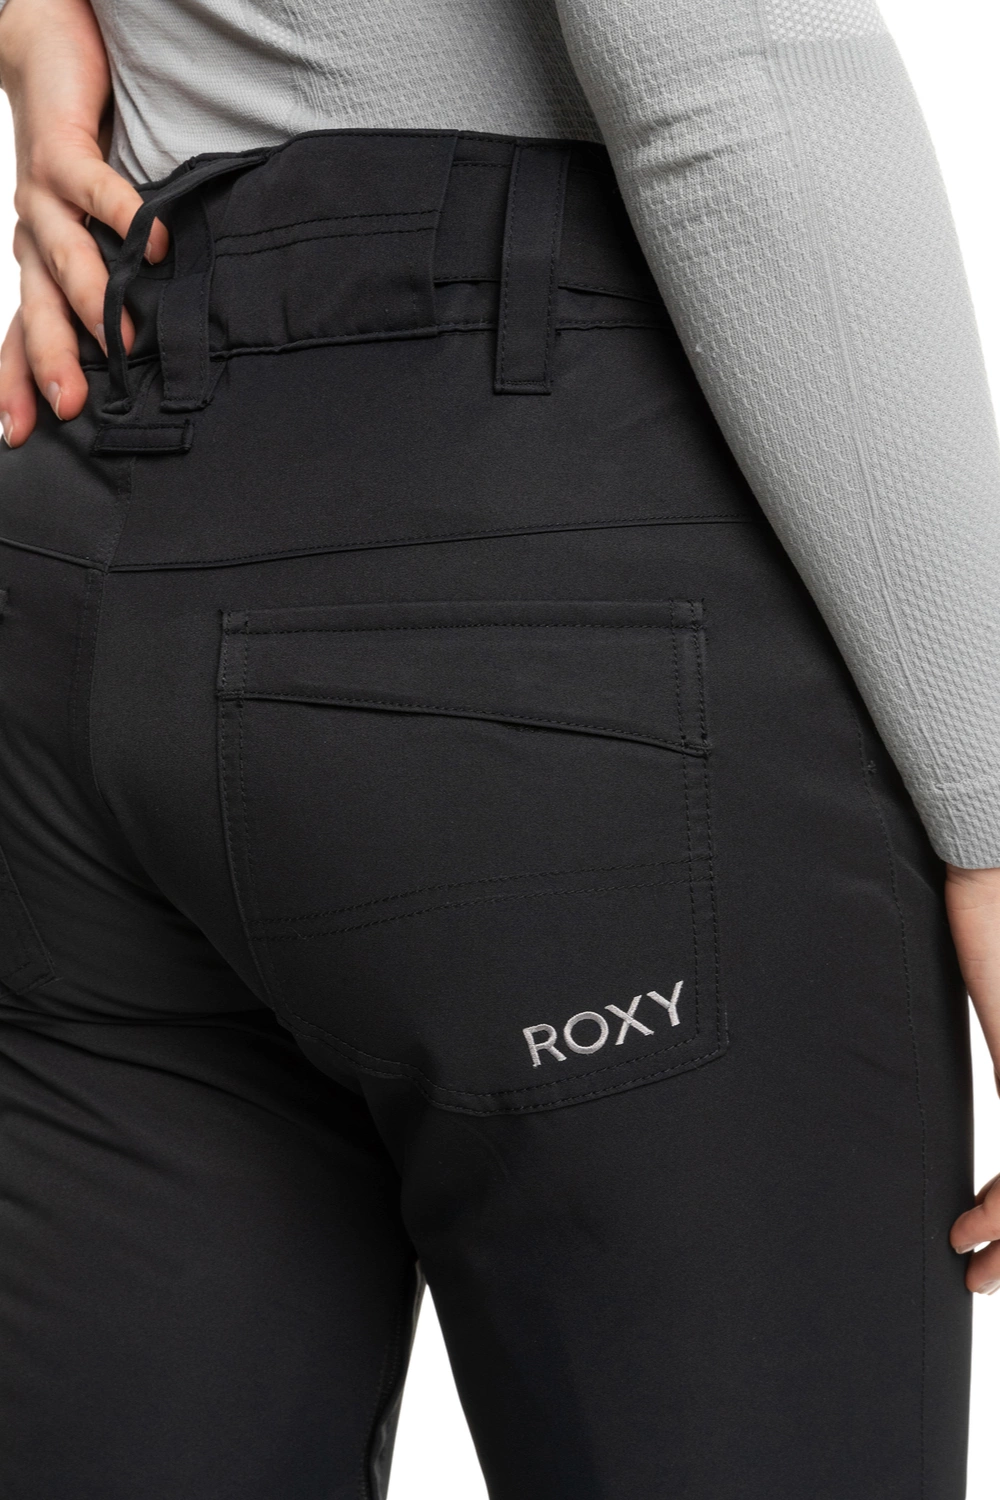 Spodnie ROXY Diversion narciarskie damskie śnieżne z membraną 10K